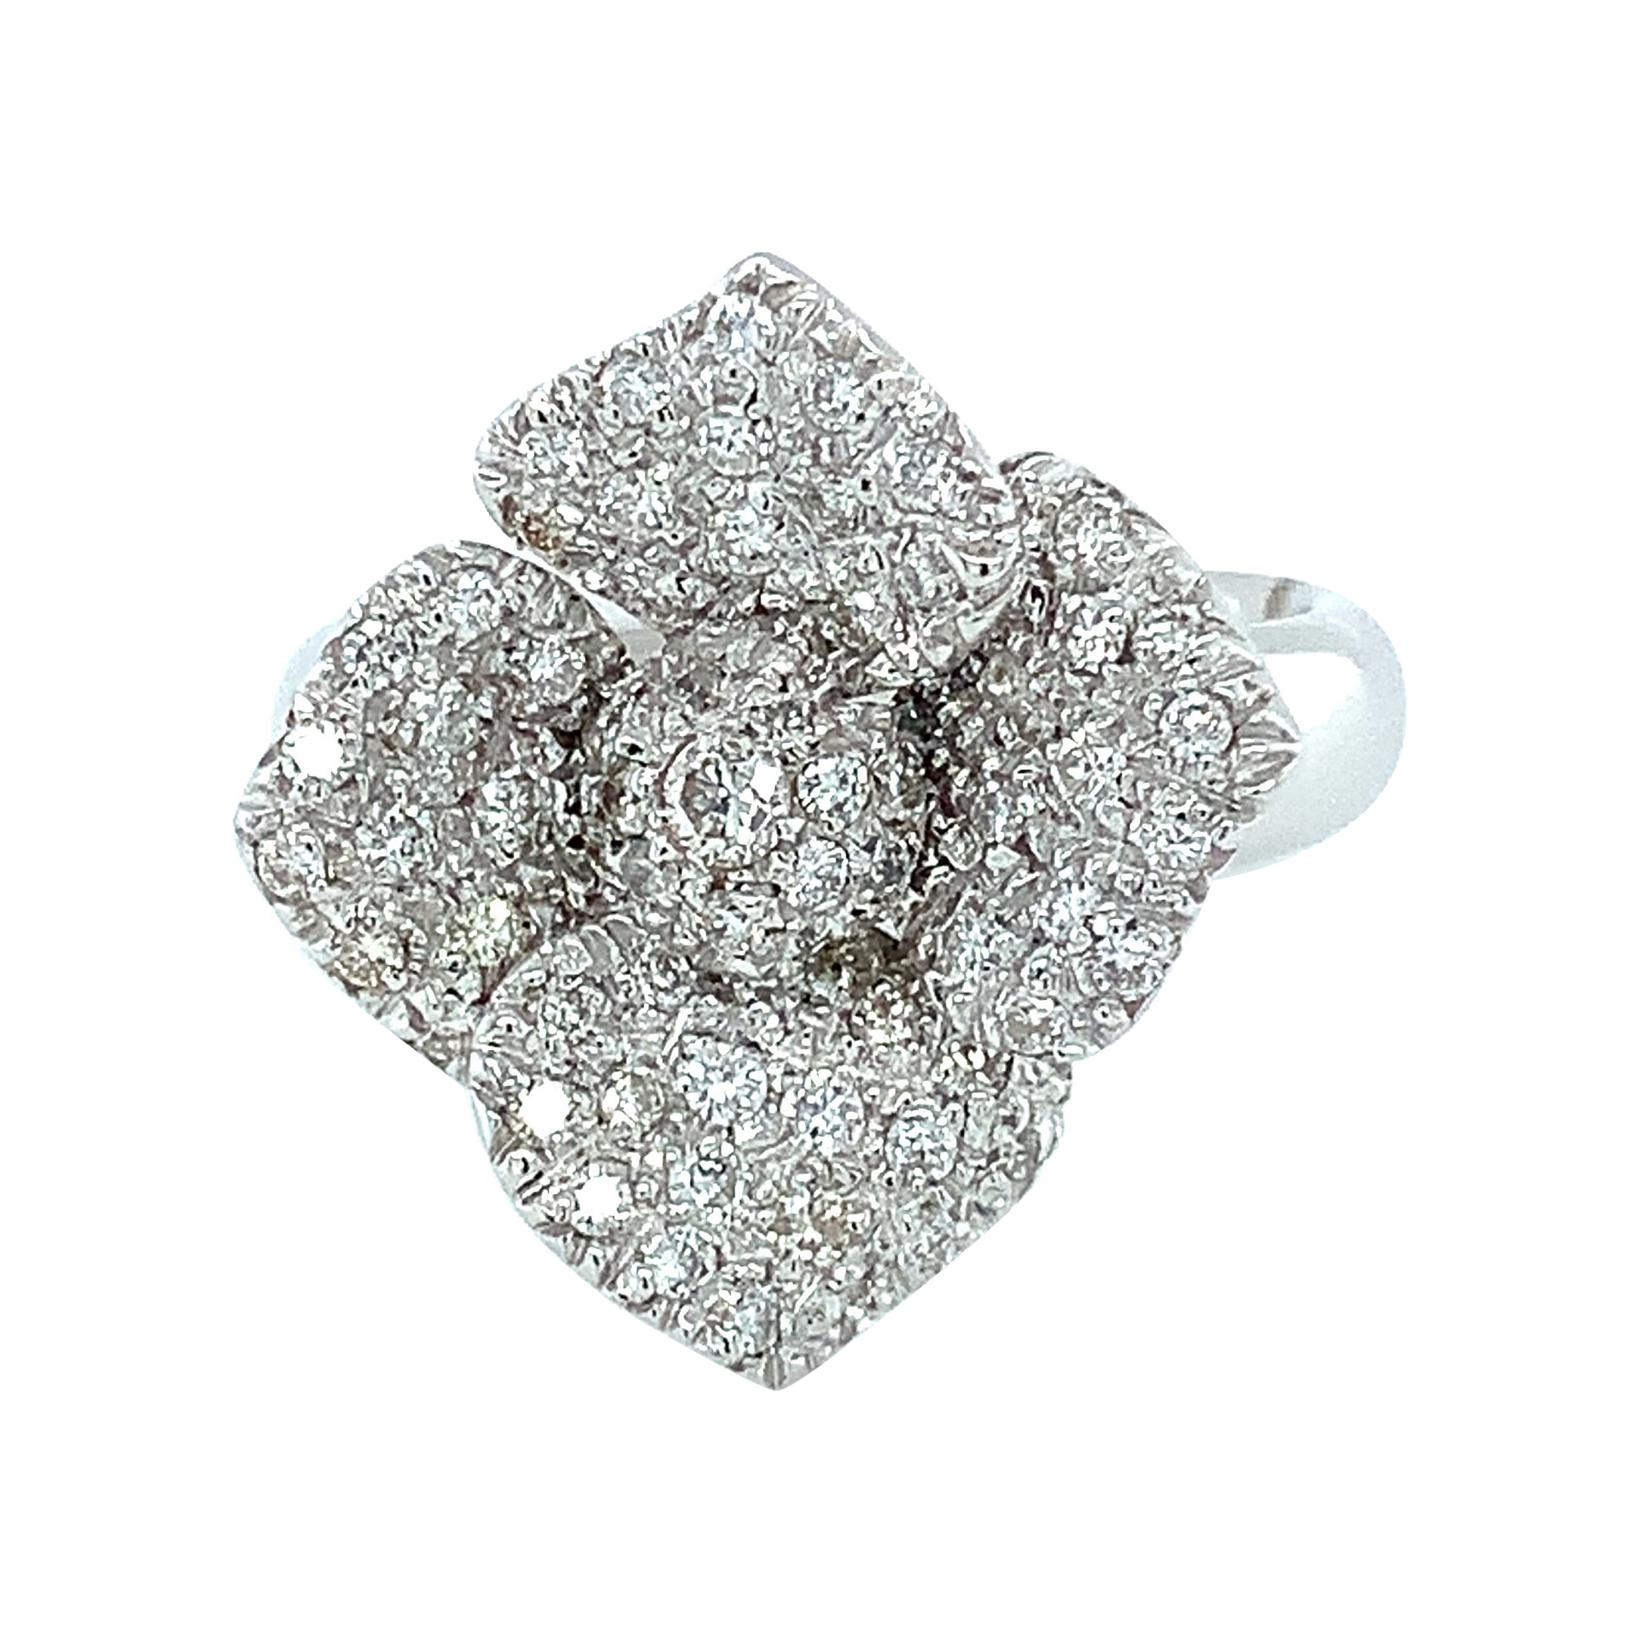 Chanel Diamond Ring - Shop on Pinterest